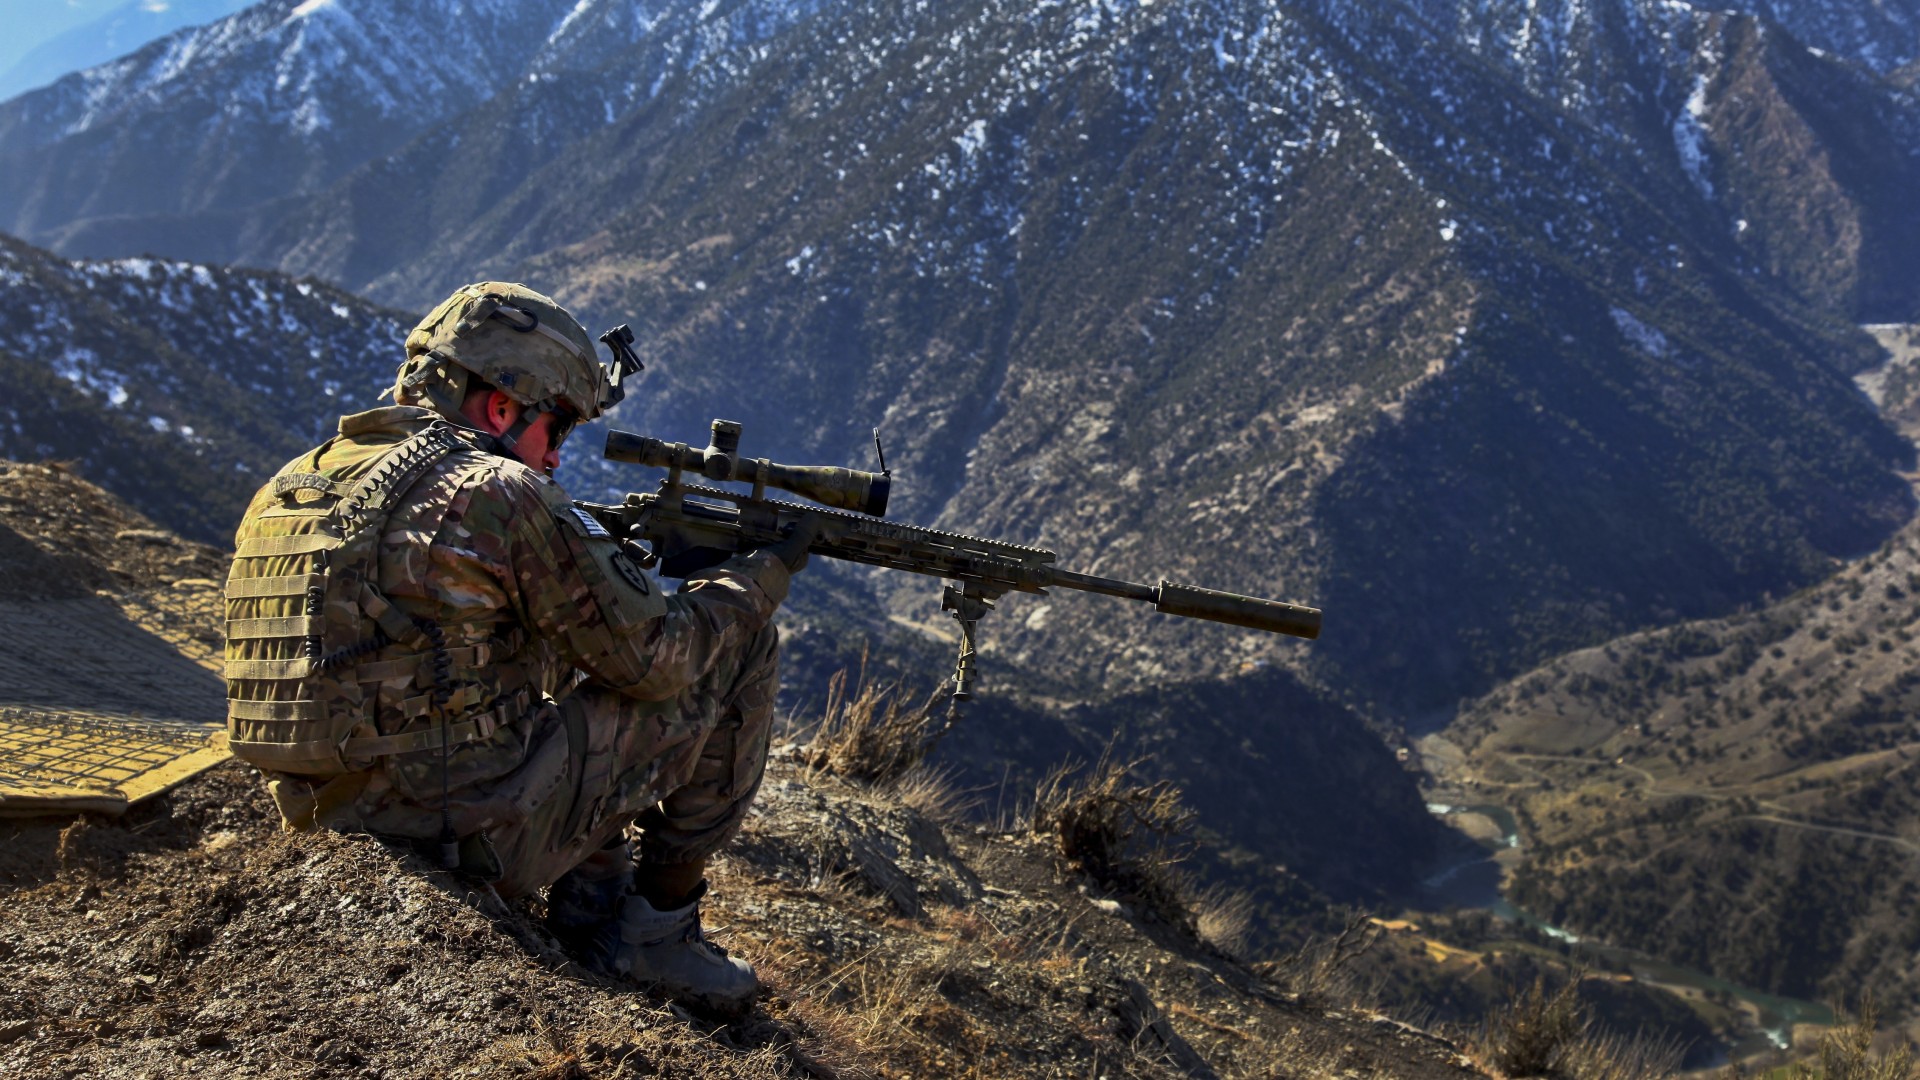 снайперская винтовка, солдат, горы, Barrett, sniper, soldier, m82, rifle, army, mountain, camo (horizontal)